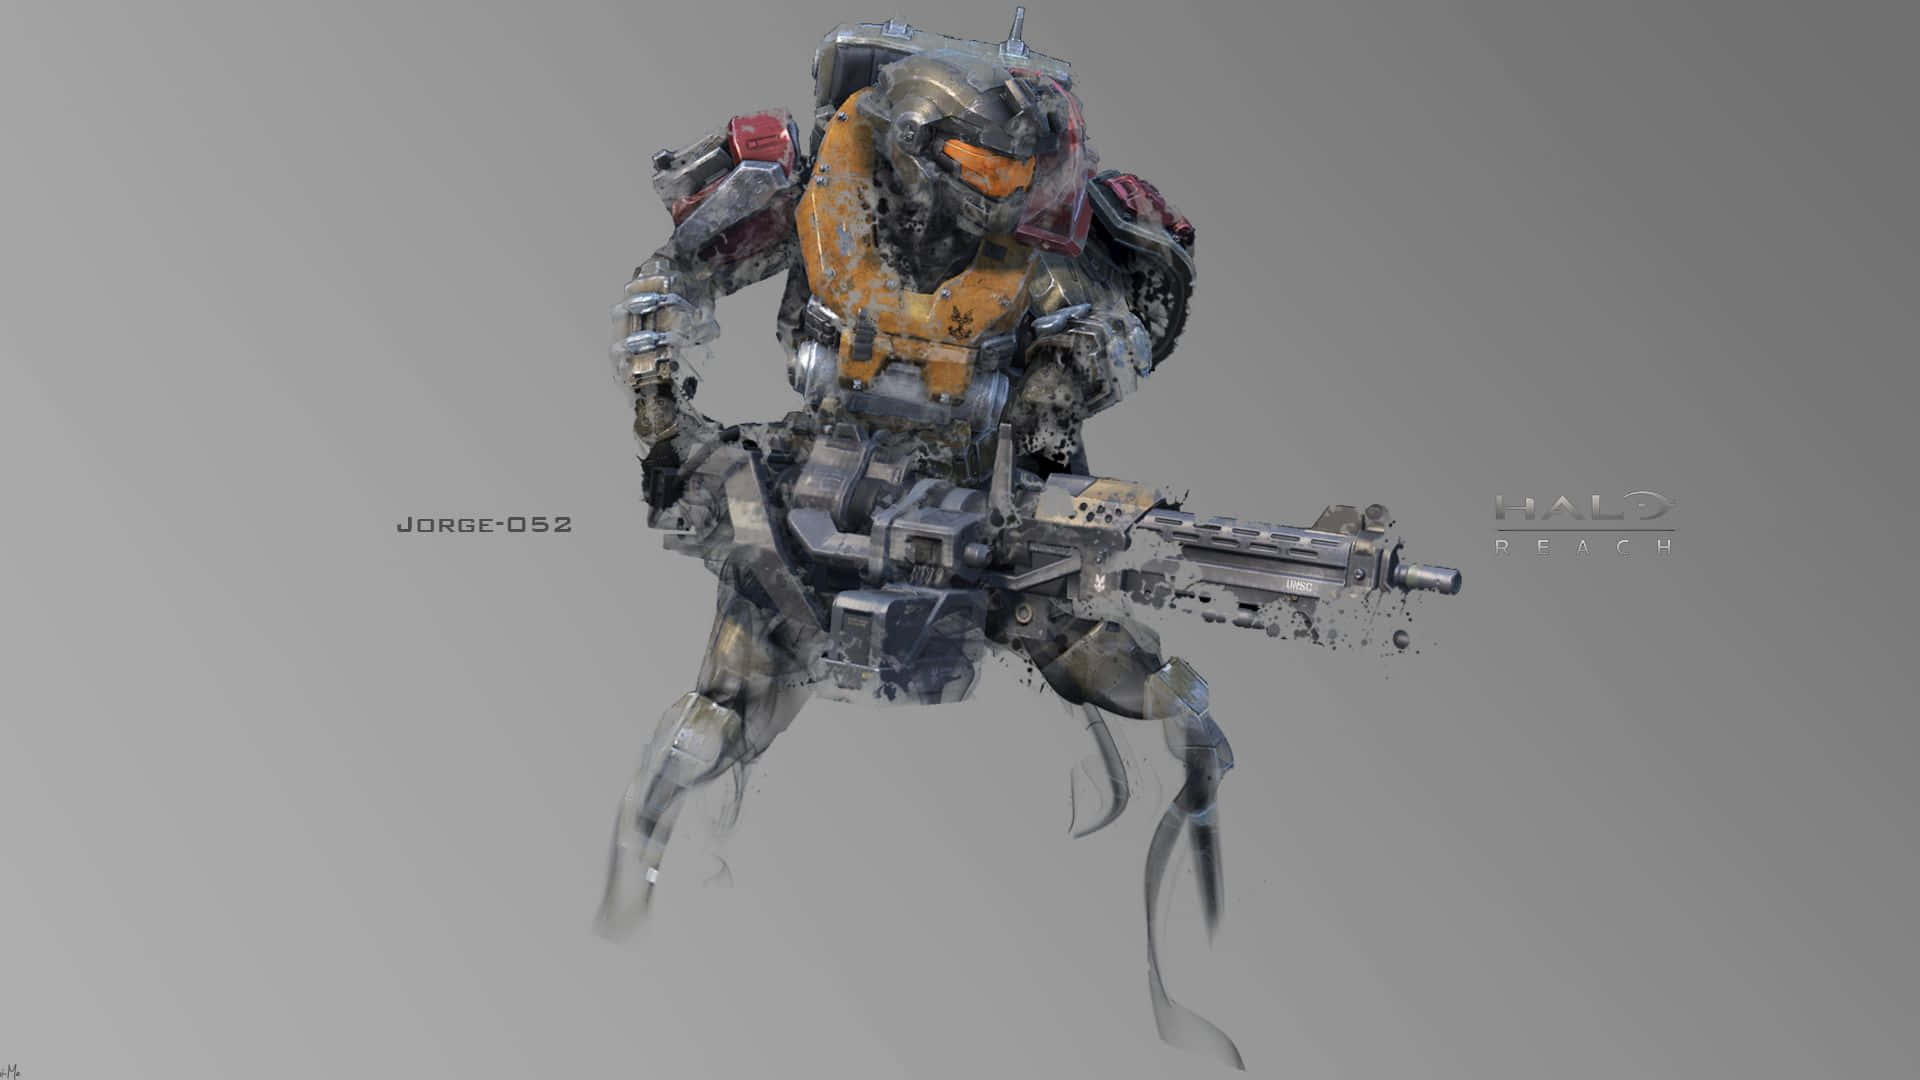 Jorge-052 in Noble Team's powerful Mjolnir armor Wallpaper